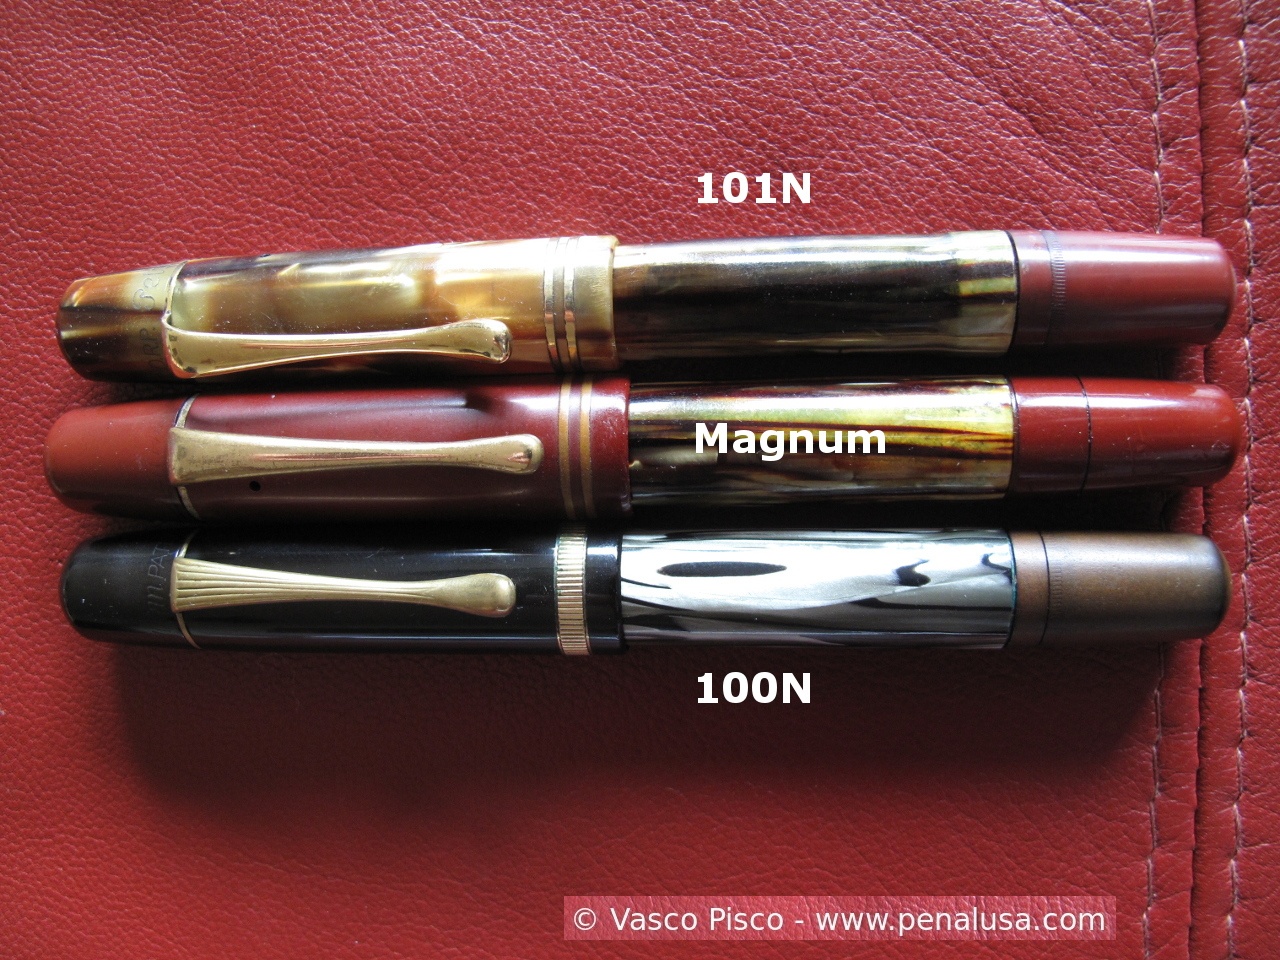 Vergleich Pelikan 101N, Magnum und 100N